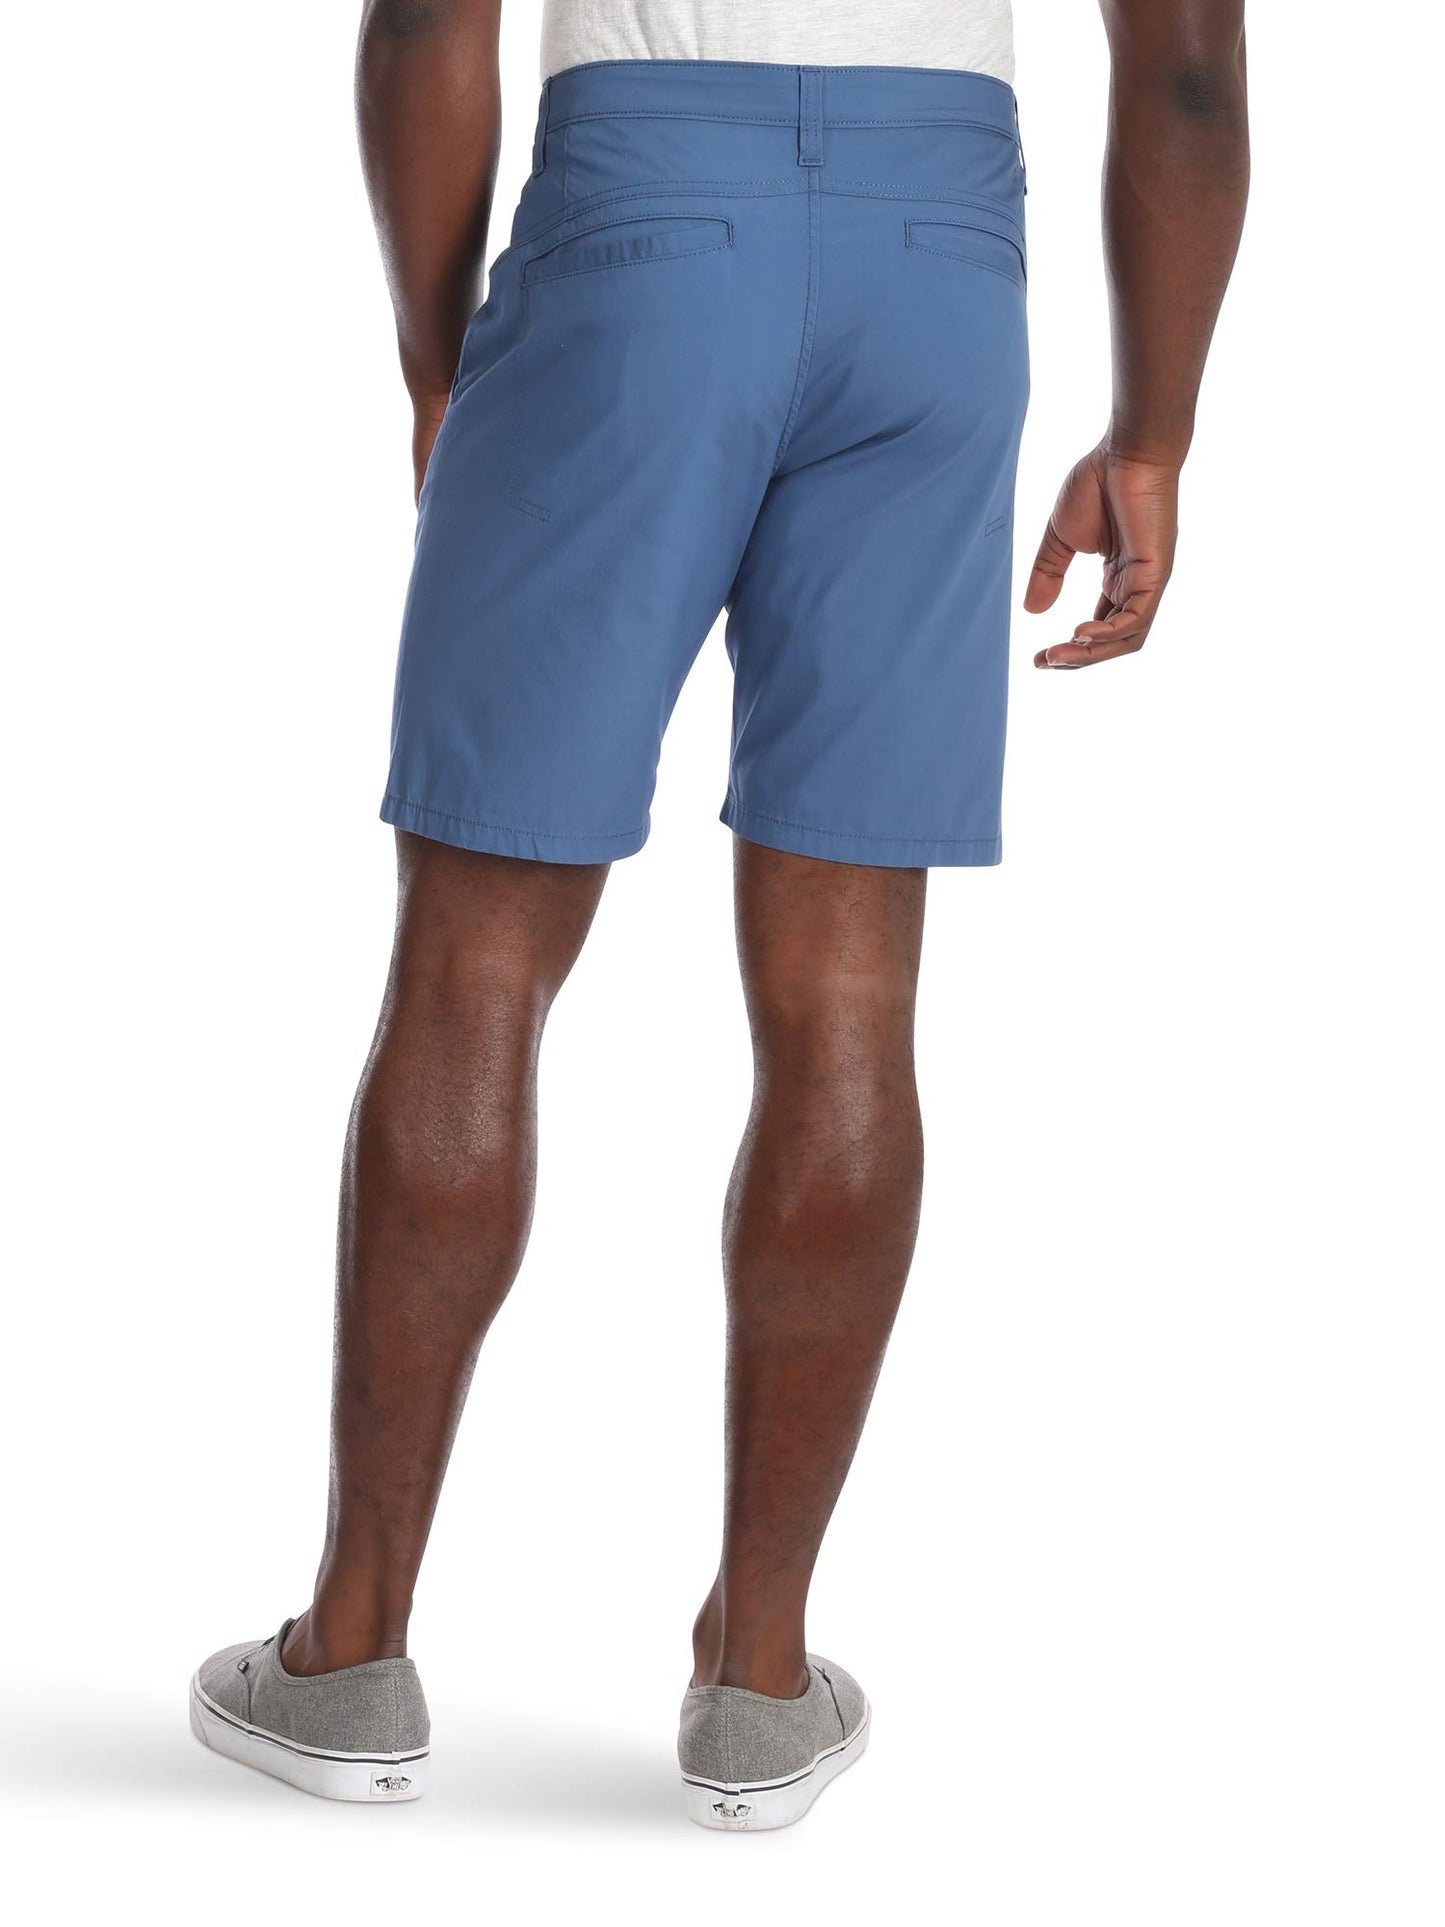 Wrangler Authentics Men's Performance Comfort Flex Flat Front Short, Galaxy Blue, 40